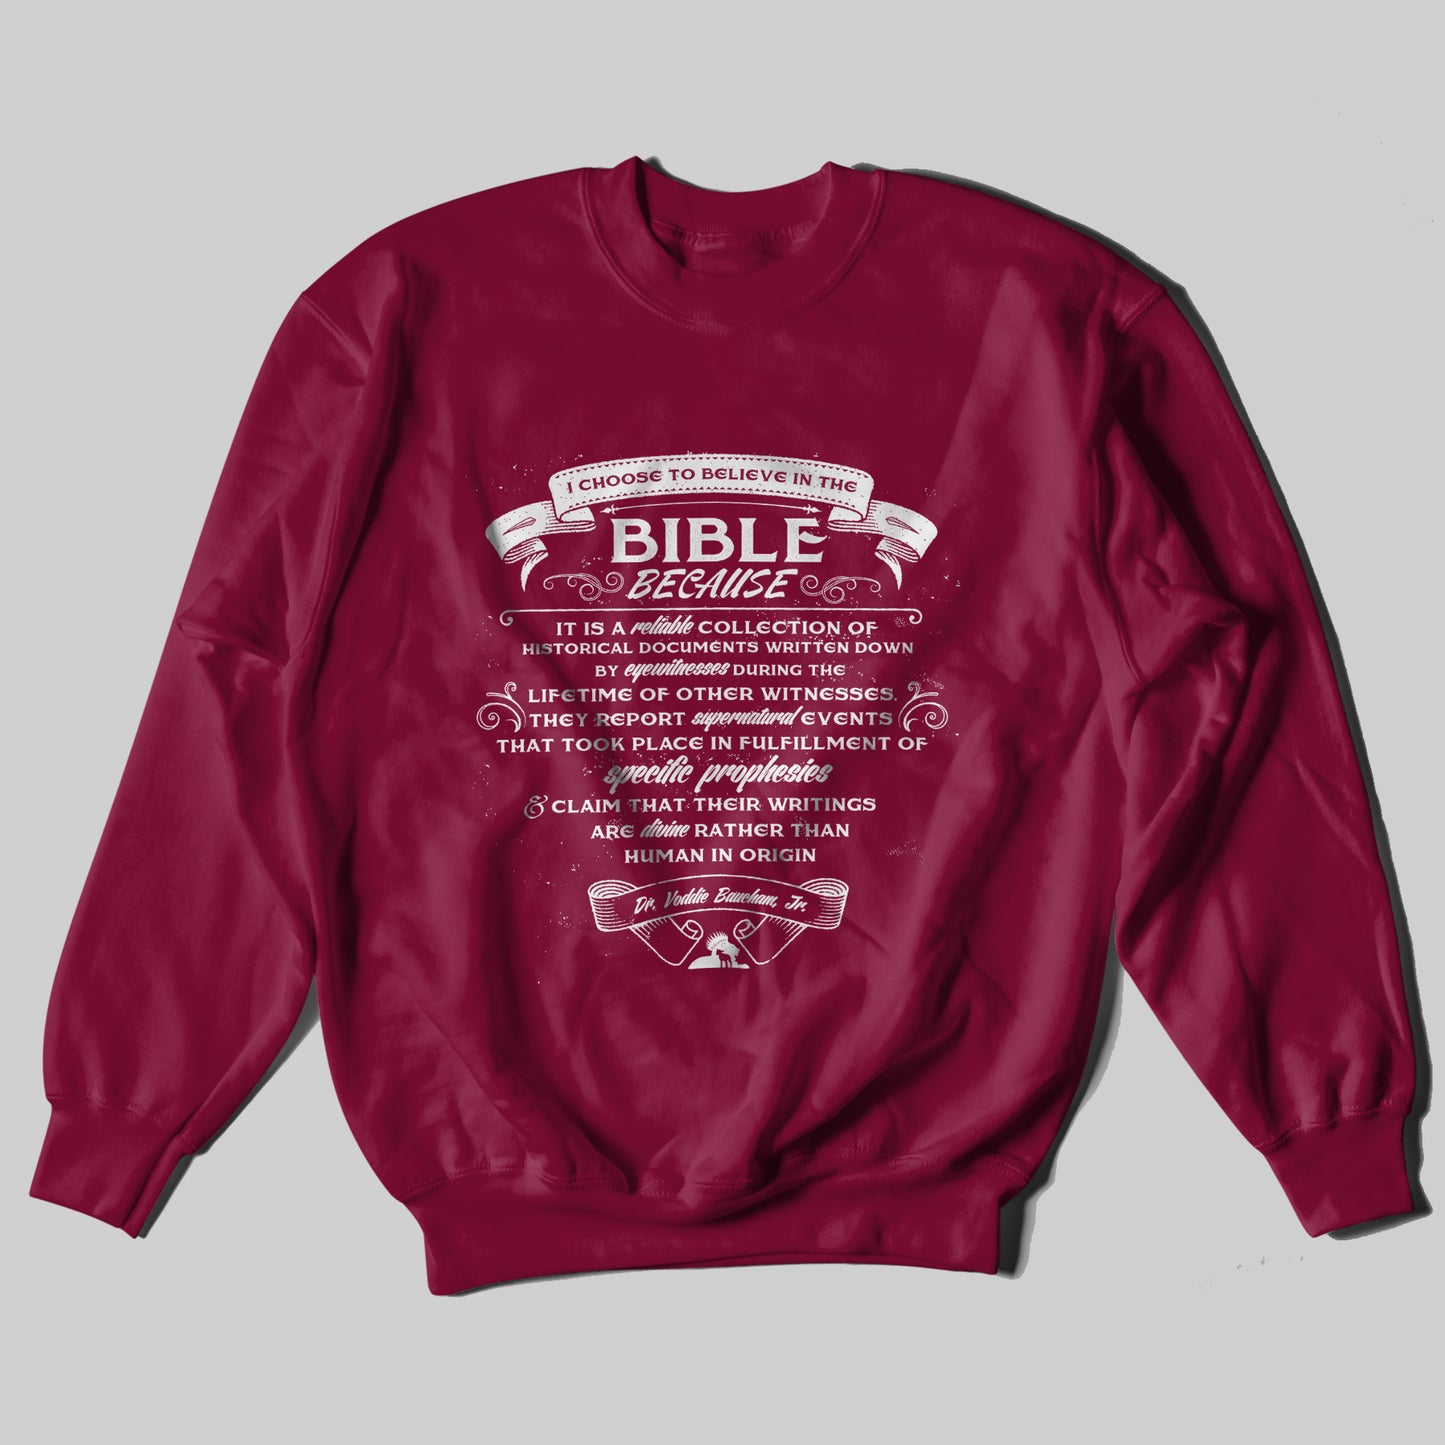 Why I Believe The Bible - Sweatshirt